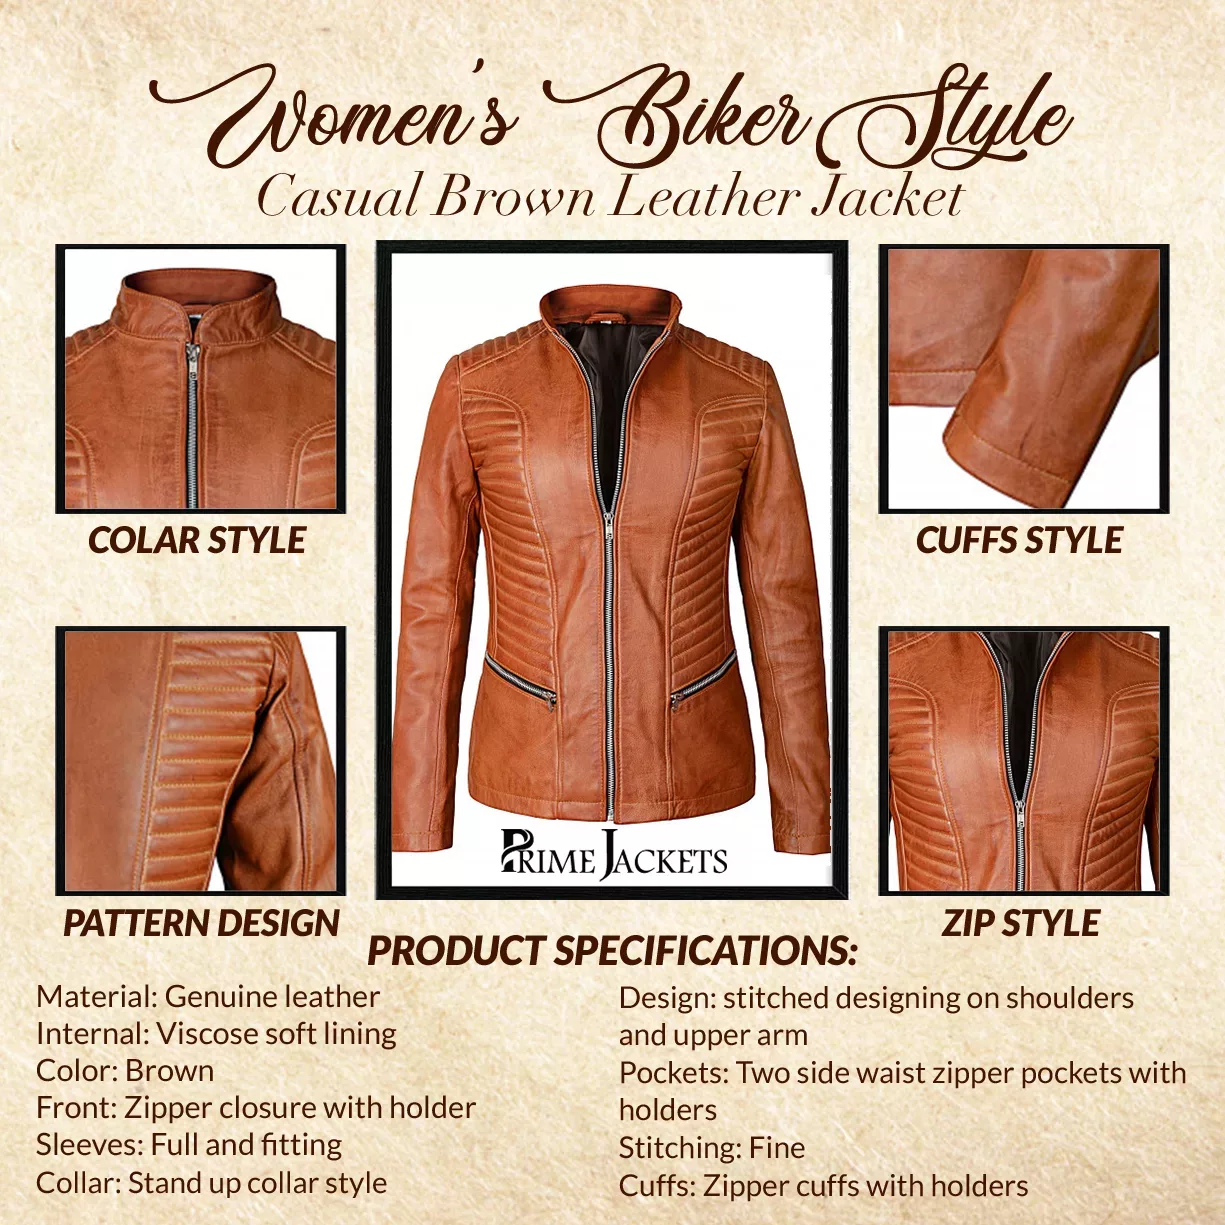 Women’s Biker Style Casual Brown Leather Jacket